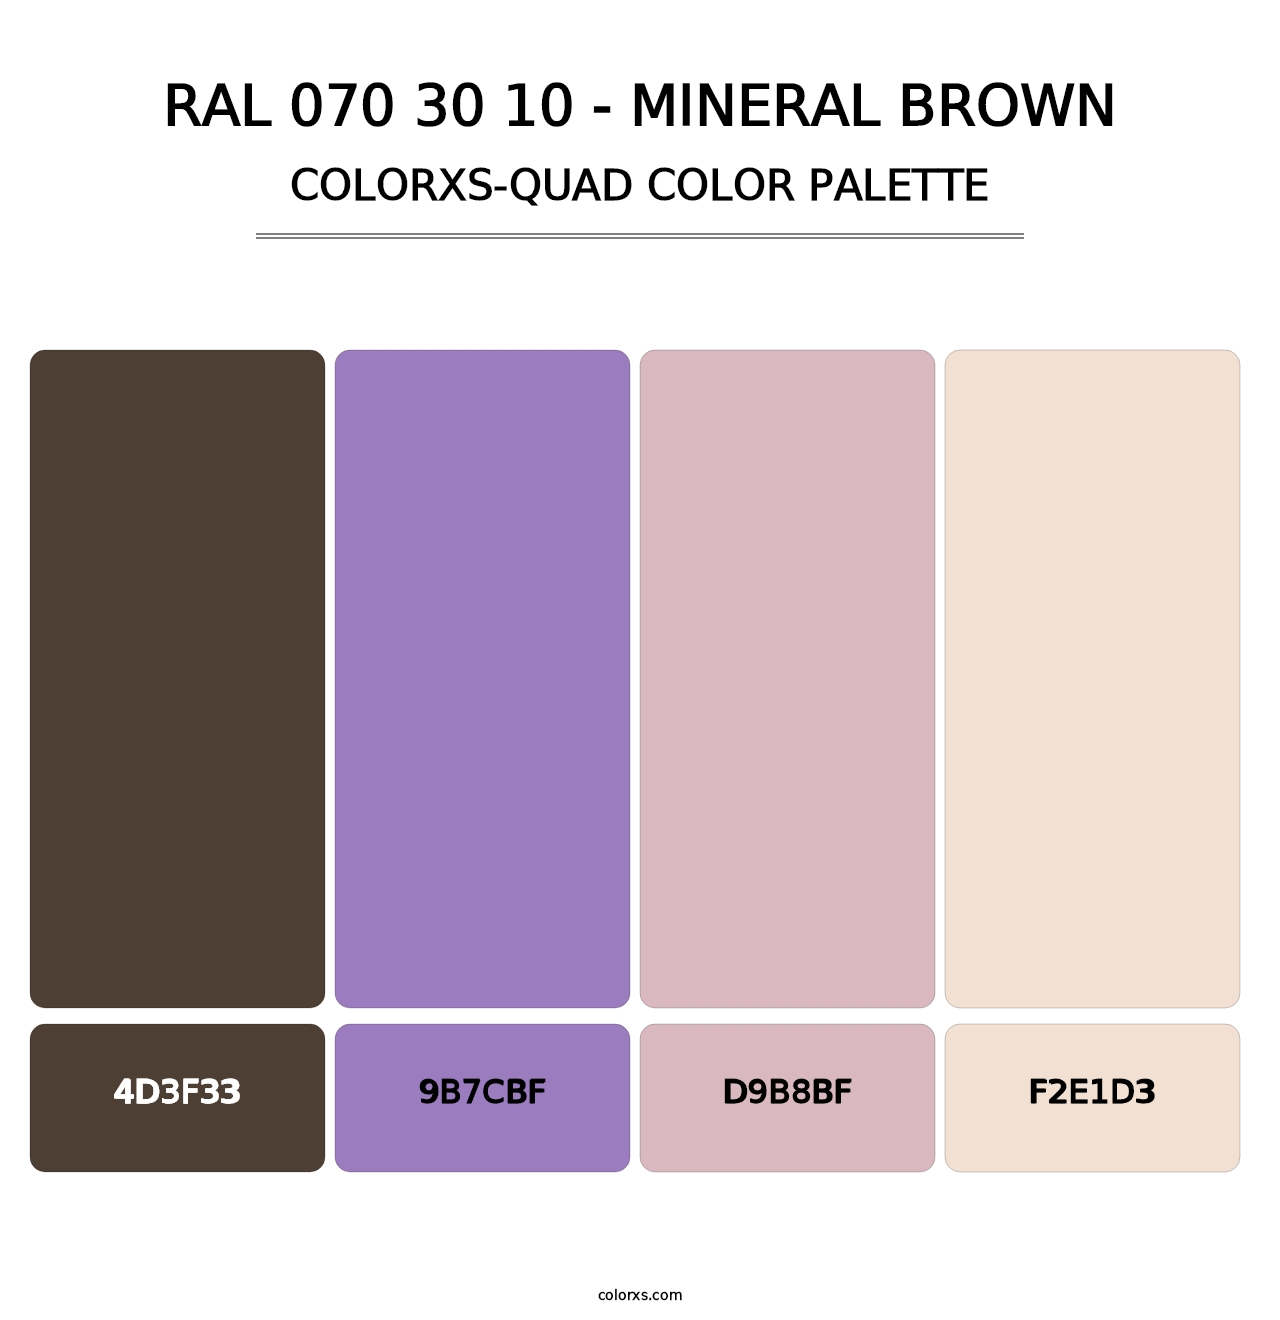 RAL 070 30 10 - Mineral Brown - Colorxs Quad Palette